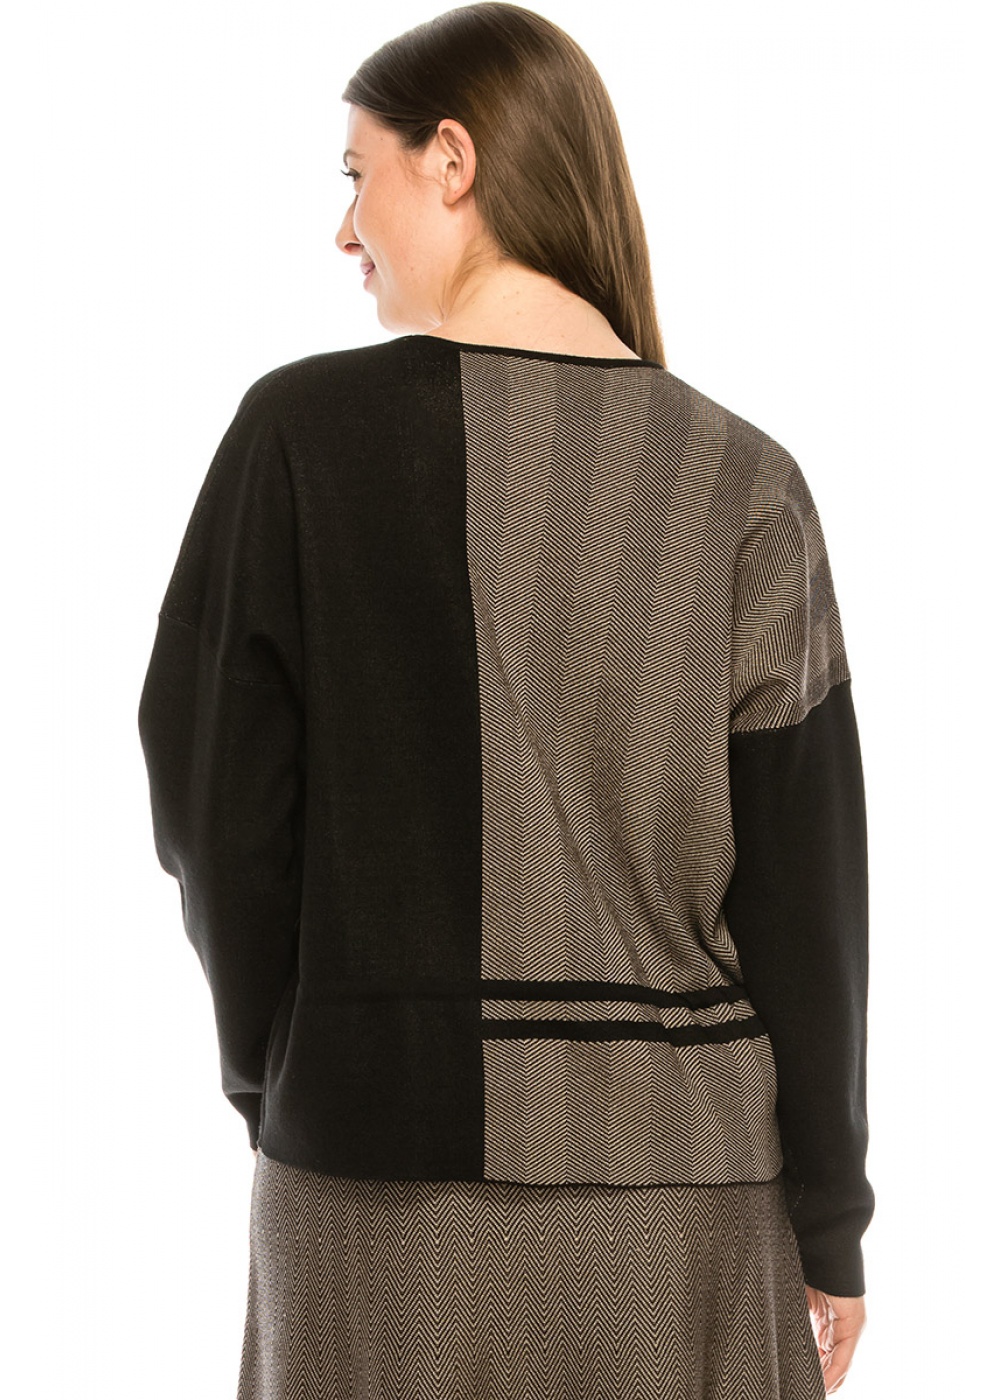 Sweater KA141-Black